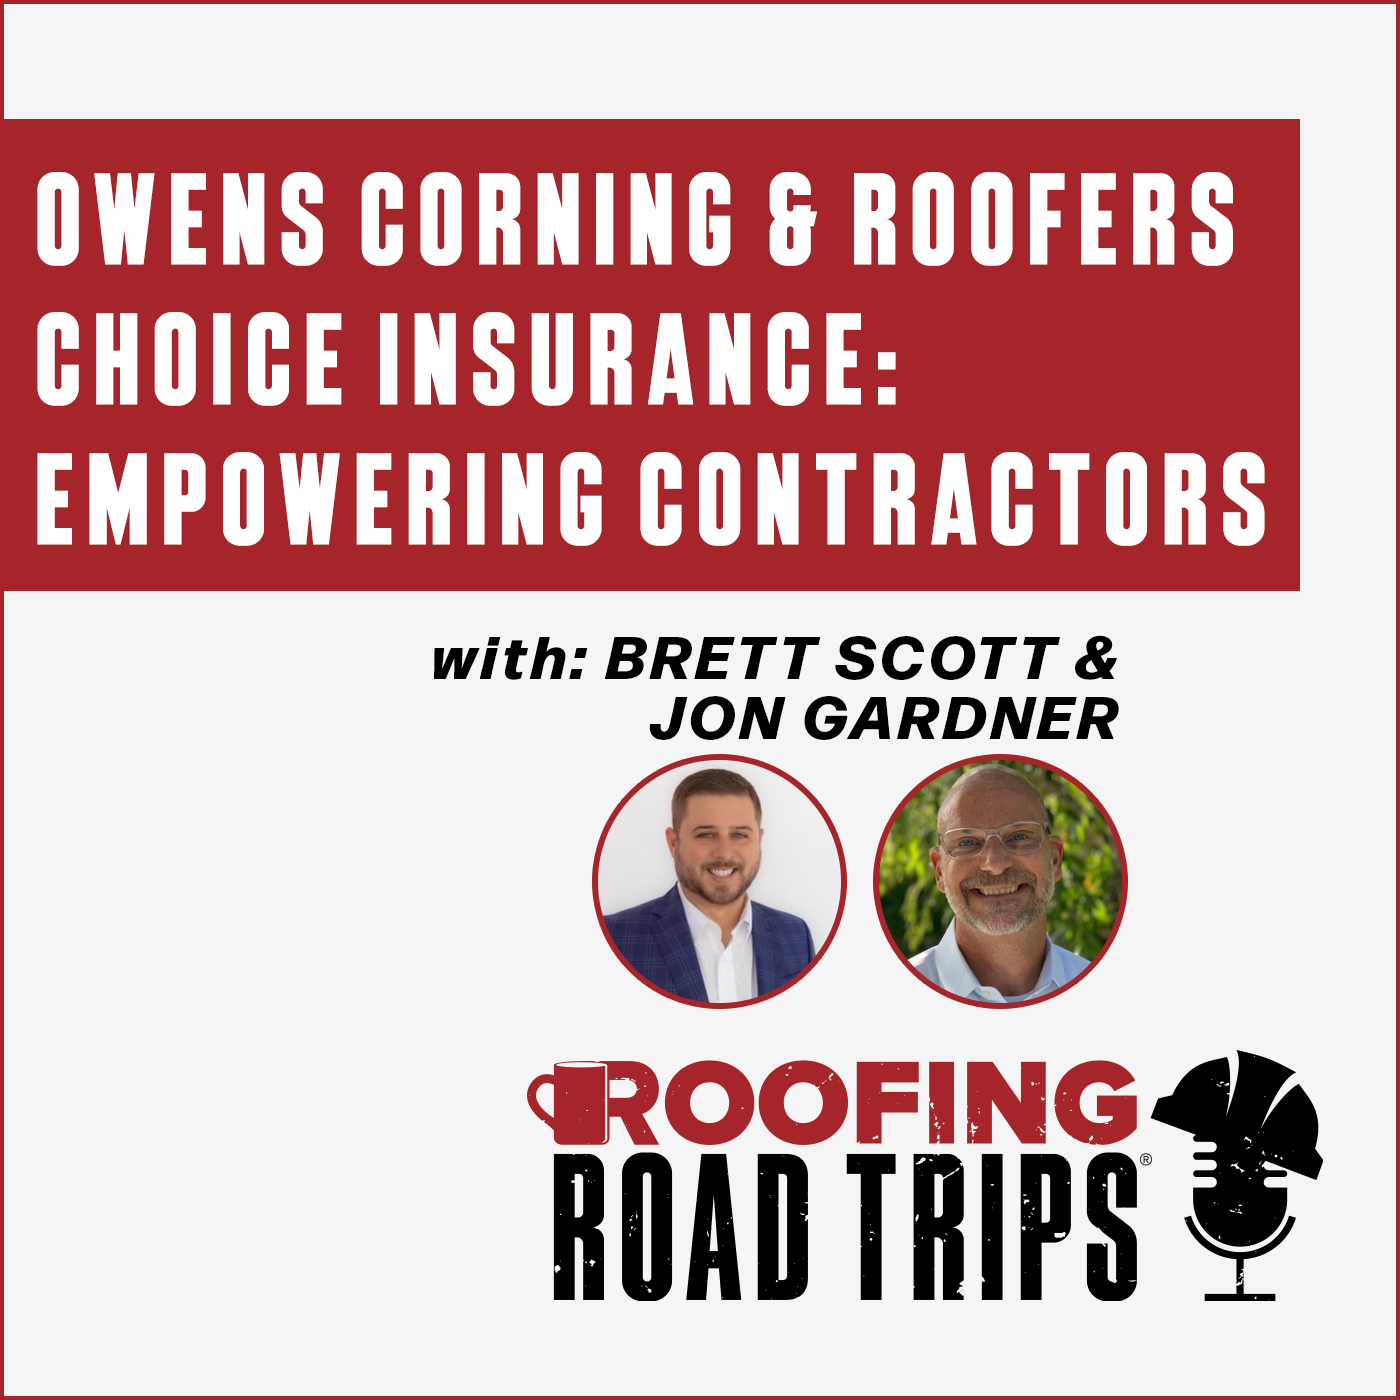 Brett Scott & Jon Gardener - Owens Corning & Roofers Choice Insurance: Empowering Contractors